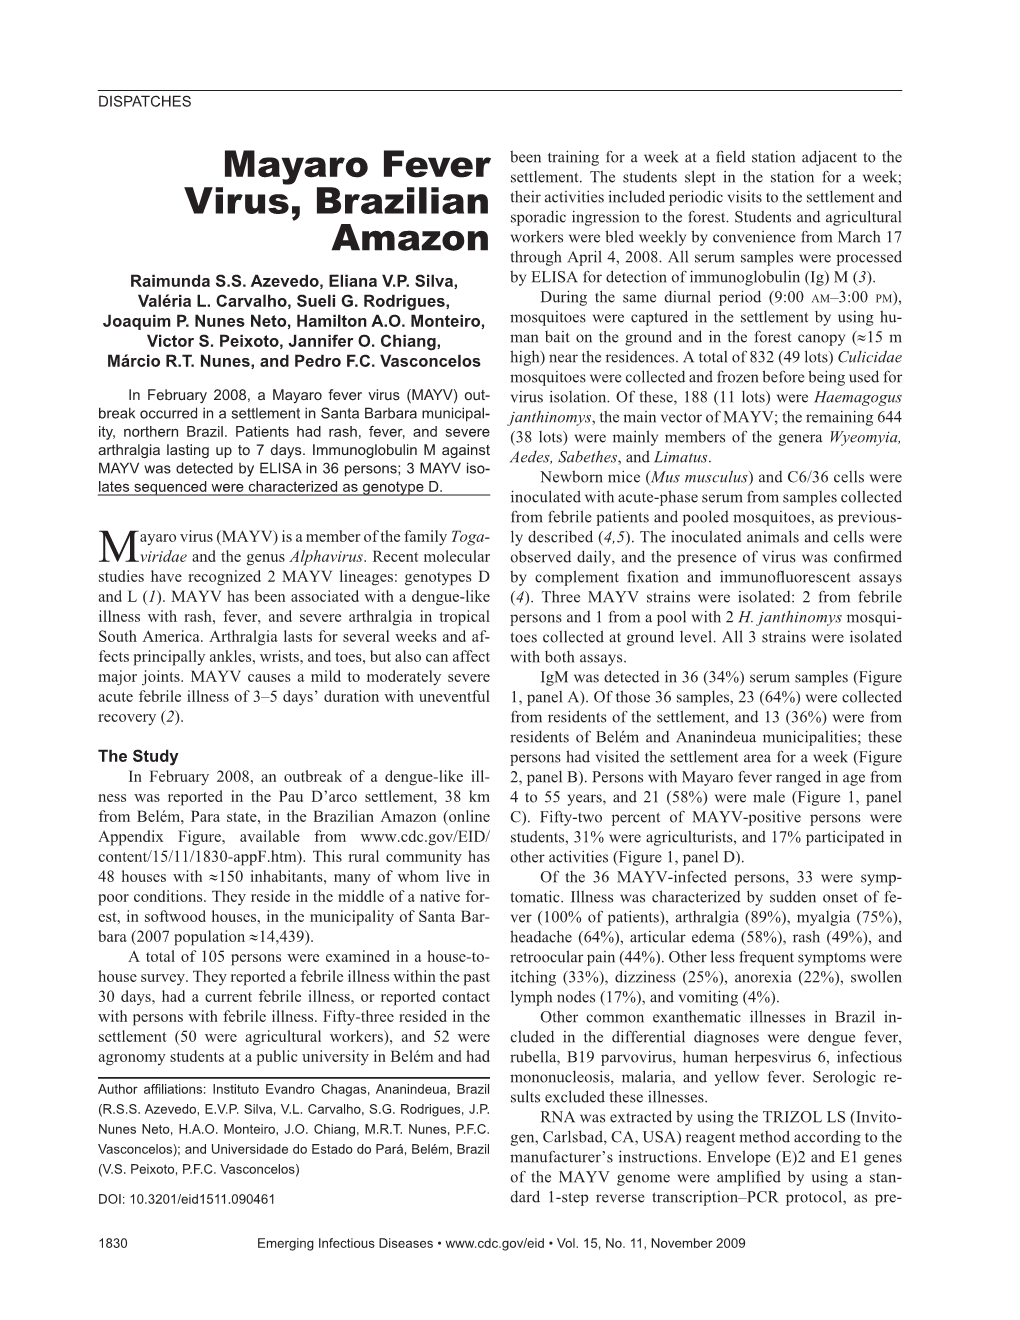 Mayaro Fever Virus, Brazilian Amazon